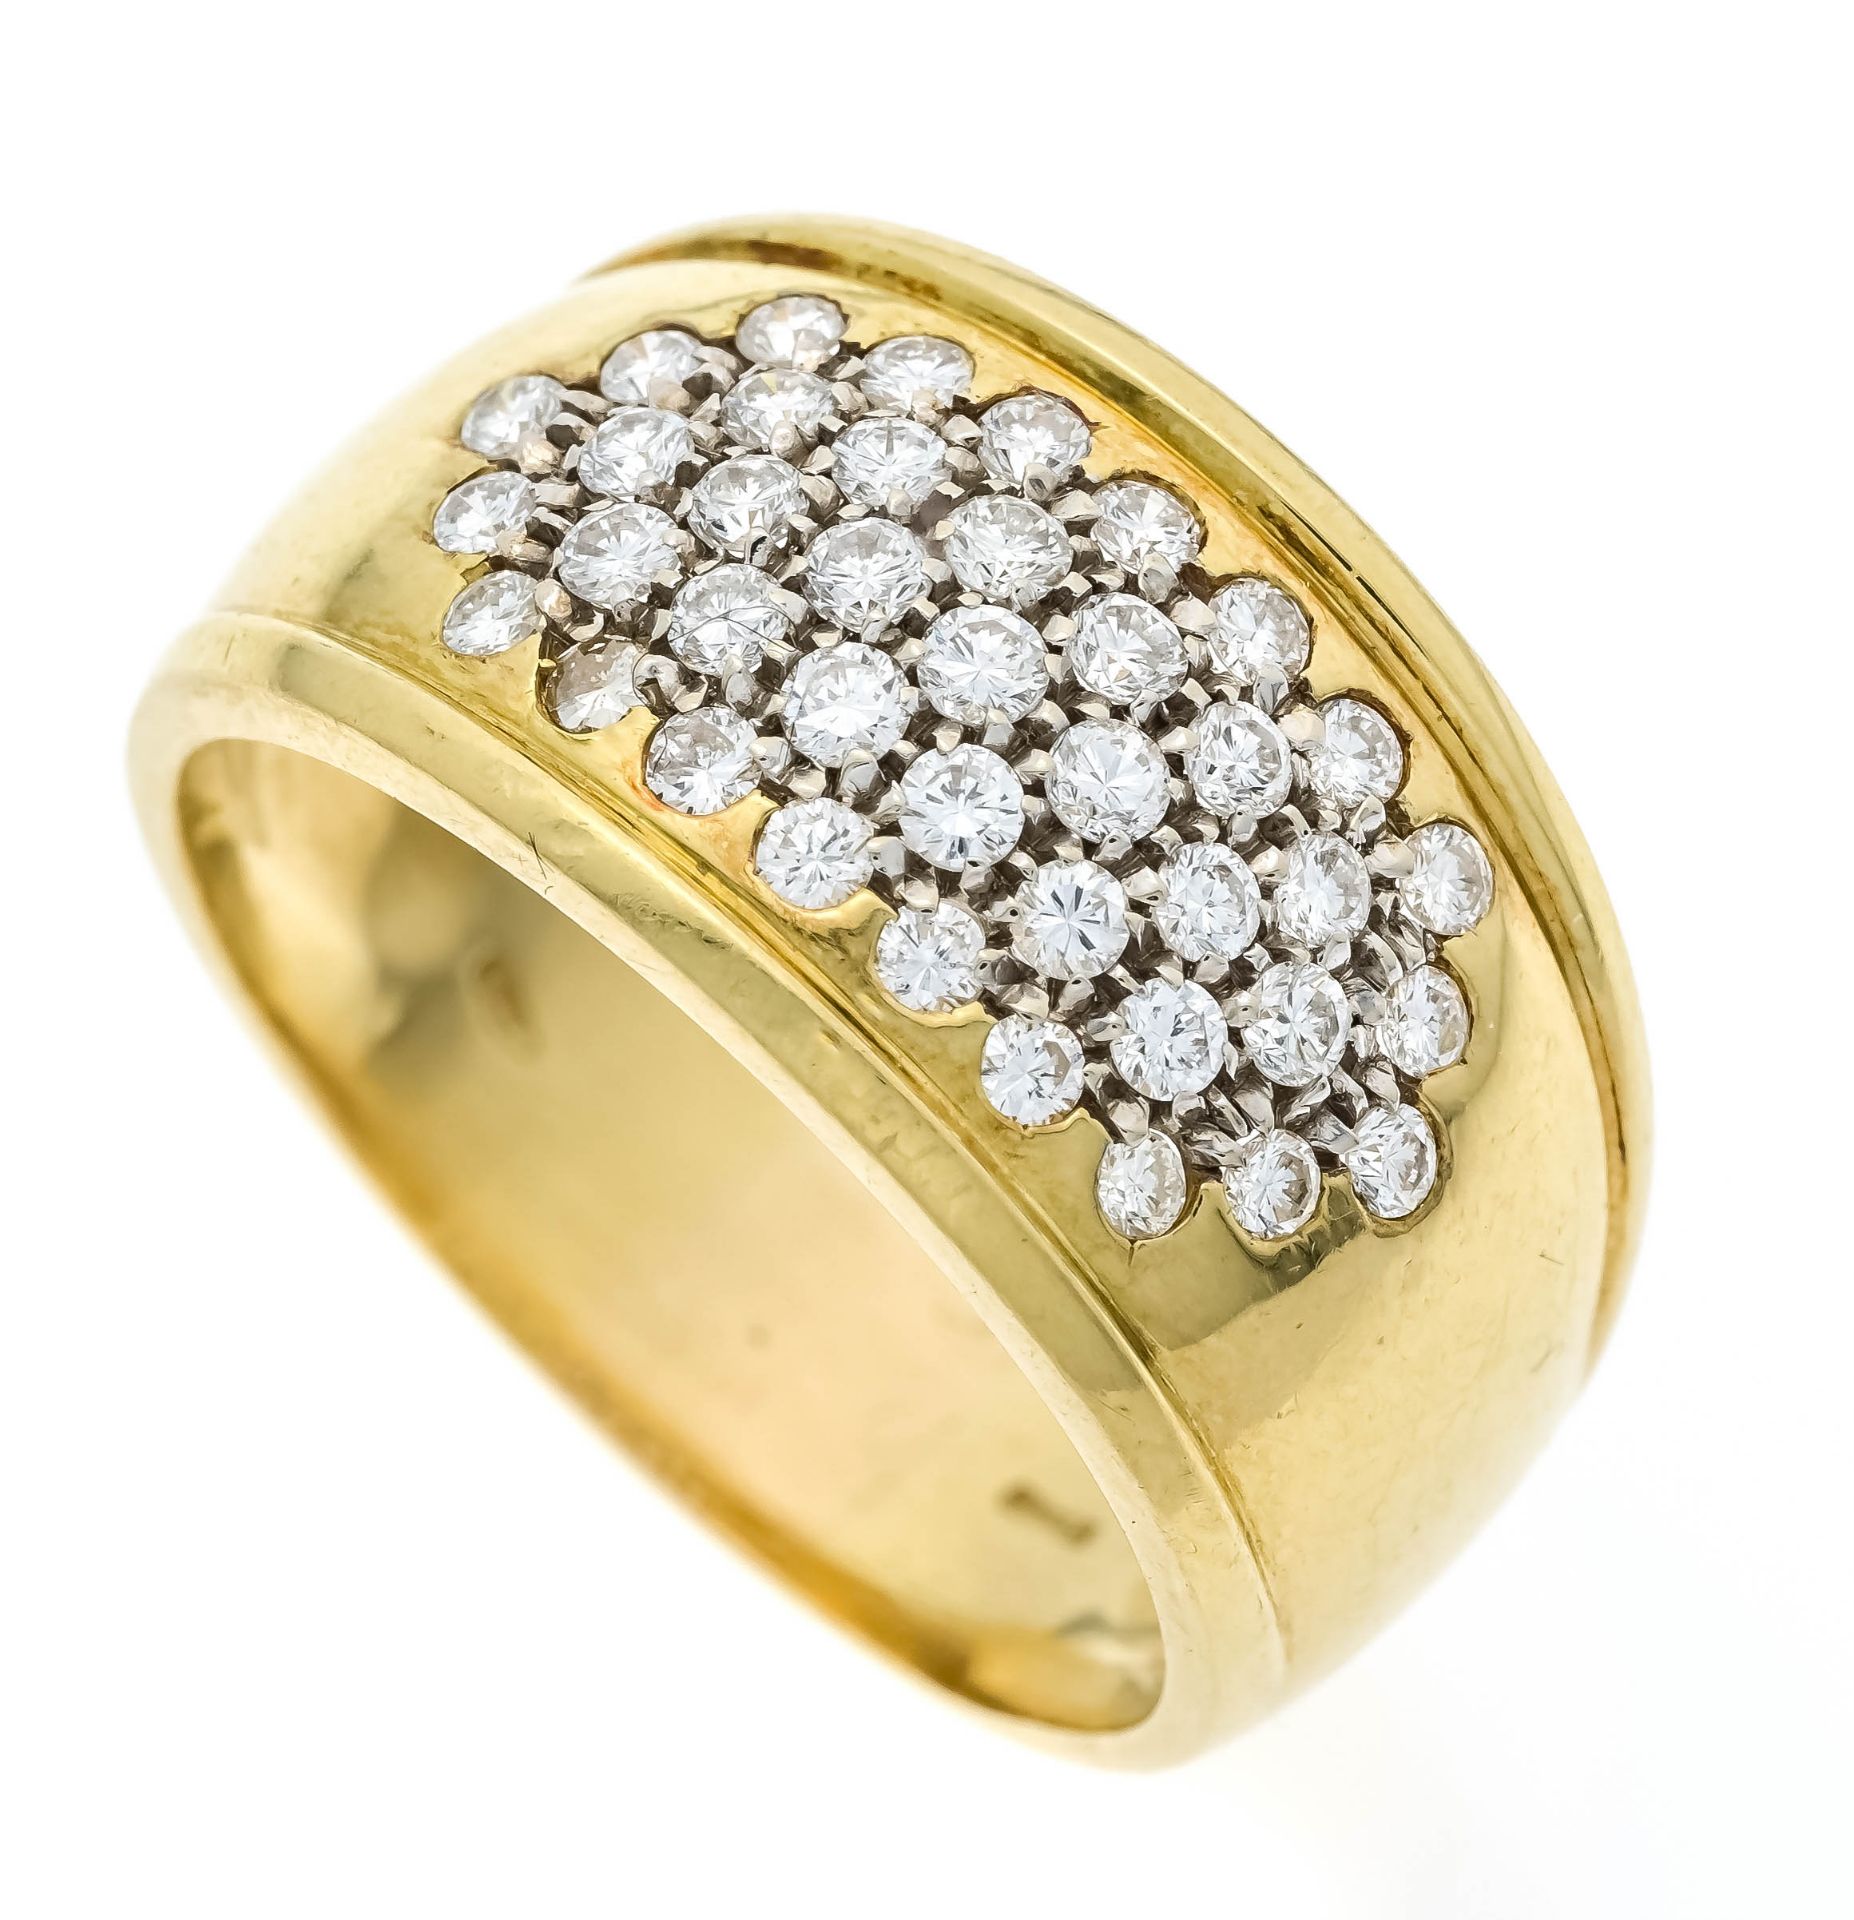 Pavé brilliant-cut diamond ring GG/WG 750/000 with 39 pavé-set brilliant-cut diamonds, total 0.73 ct